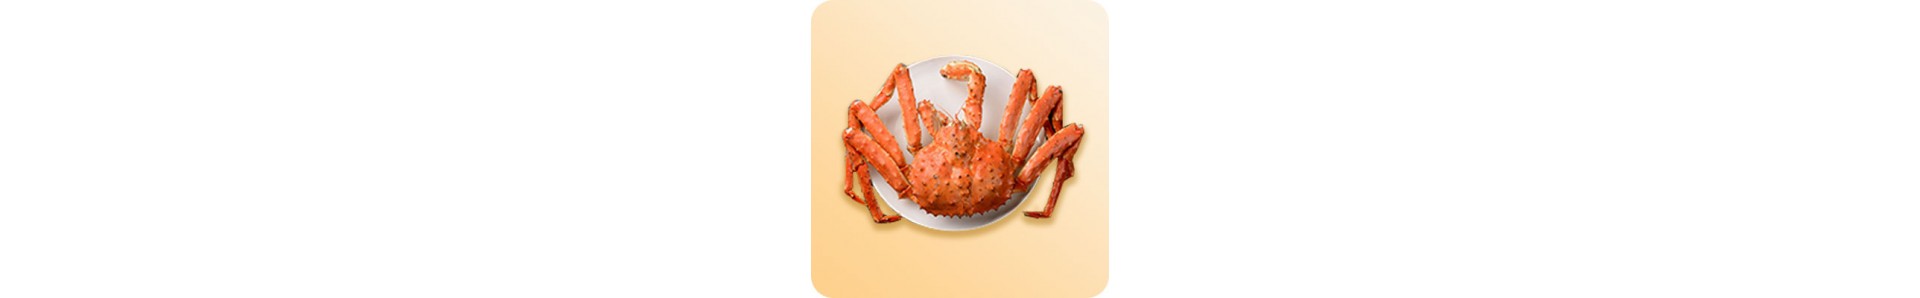 Lobster, Crawfish, Crab